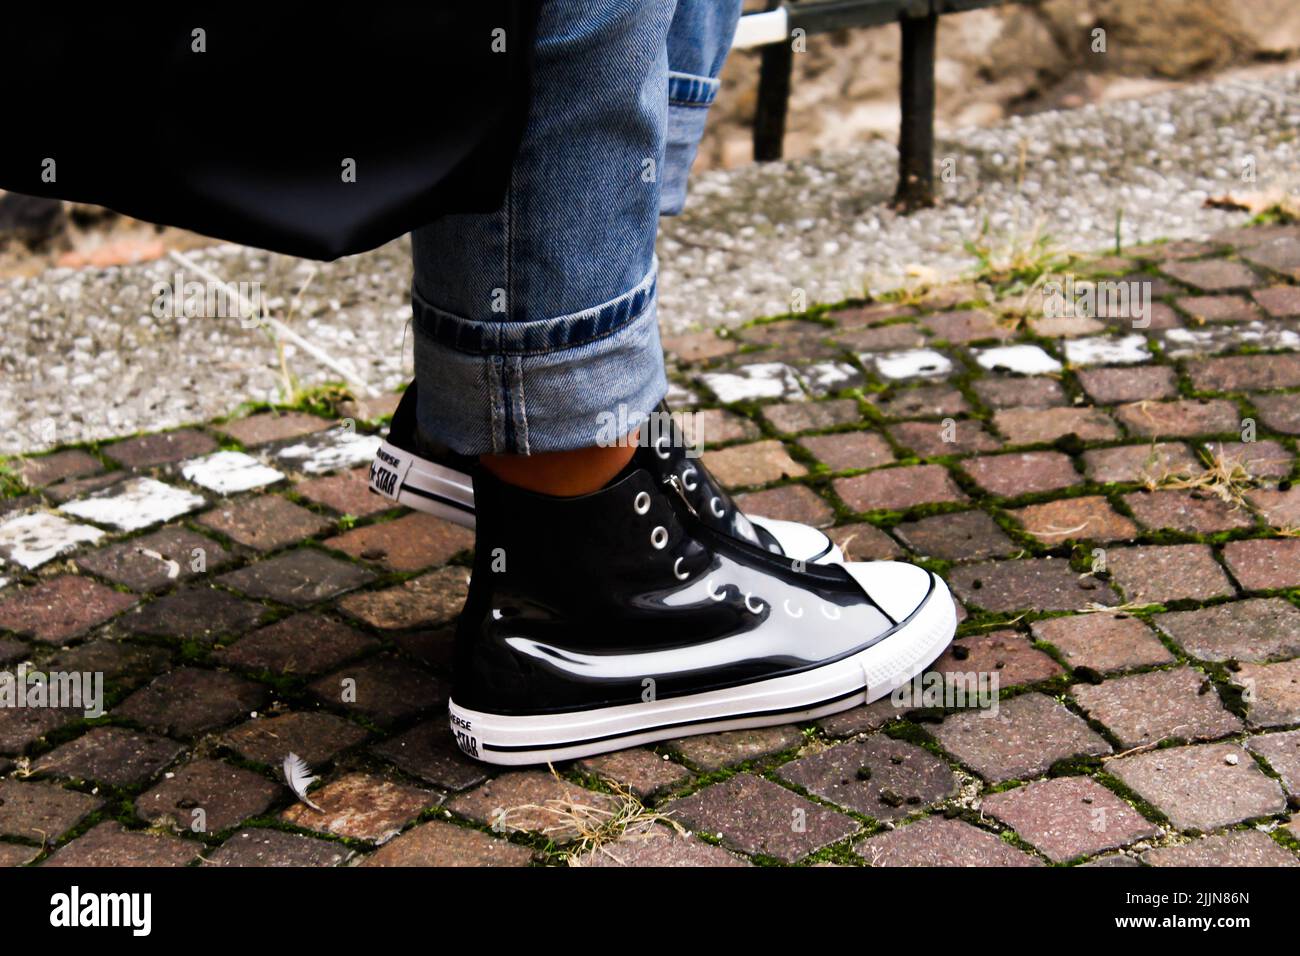 Outdoors shoe converse -Fotos und -Bildmaterial in hoher Auflösung – Alamy